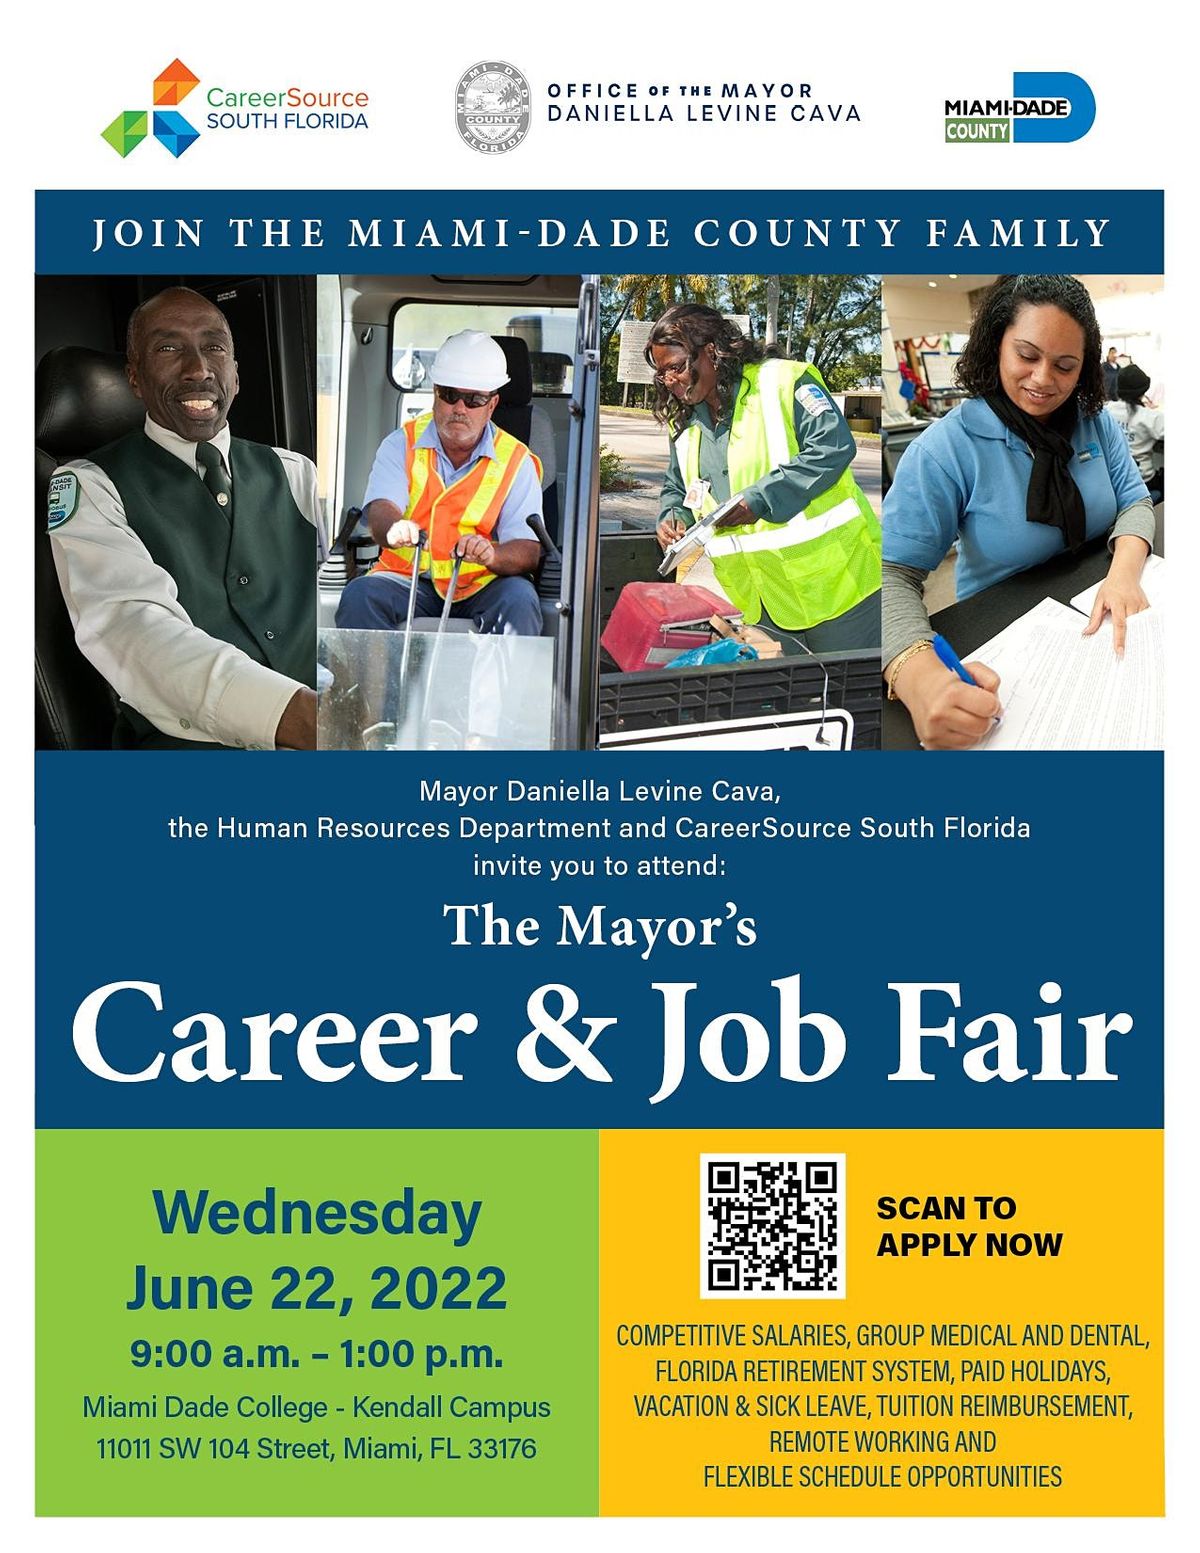 Miami-Dade County Hiring Fair - Job Offers on the Spot!